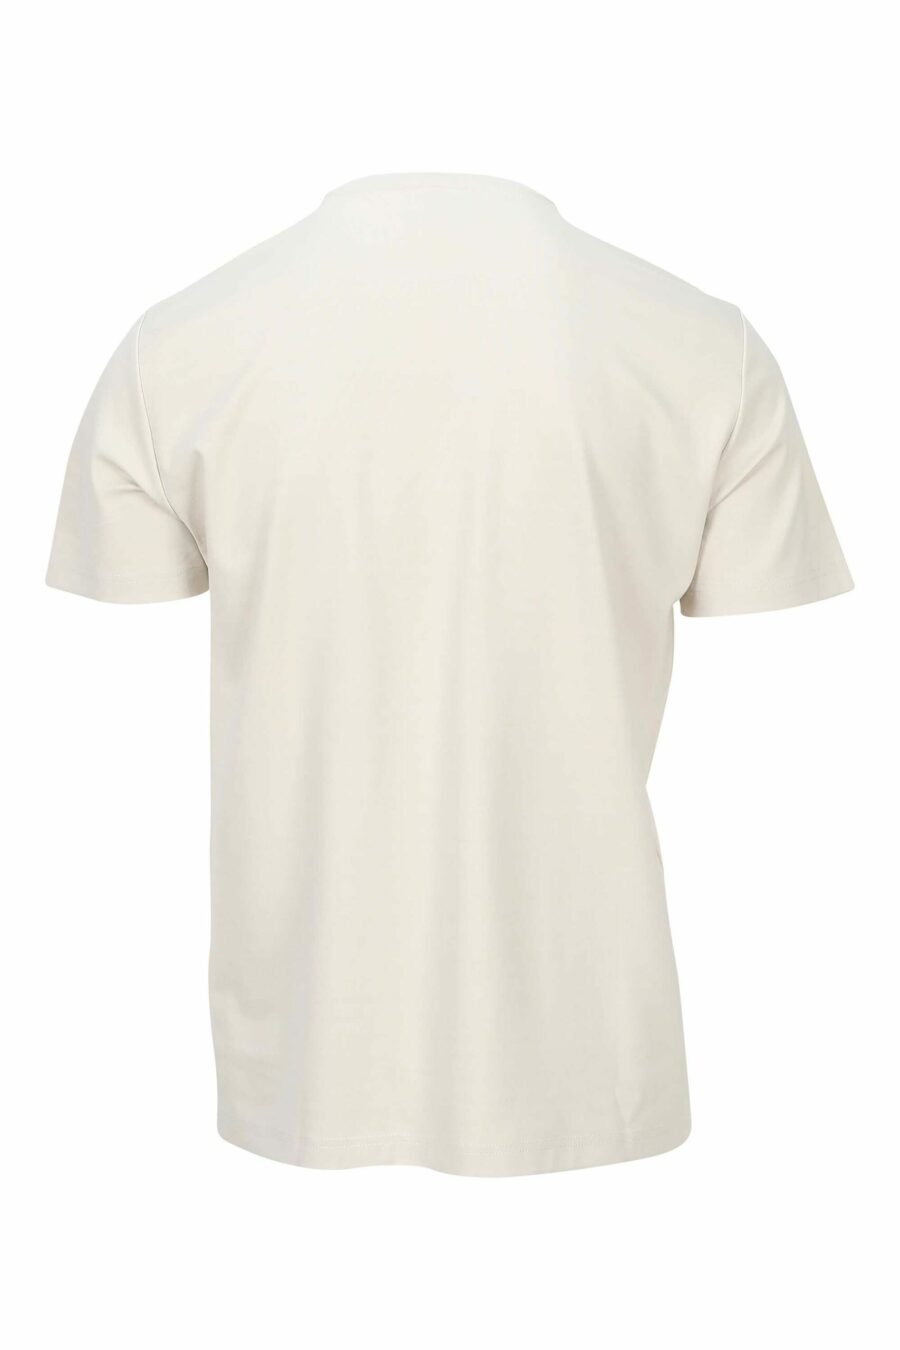 T-shirt grau mit schwarzem "lux identity" maxilogo - 8057767001988 1 skaliert